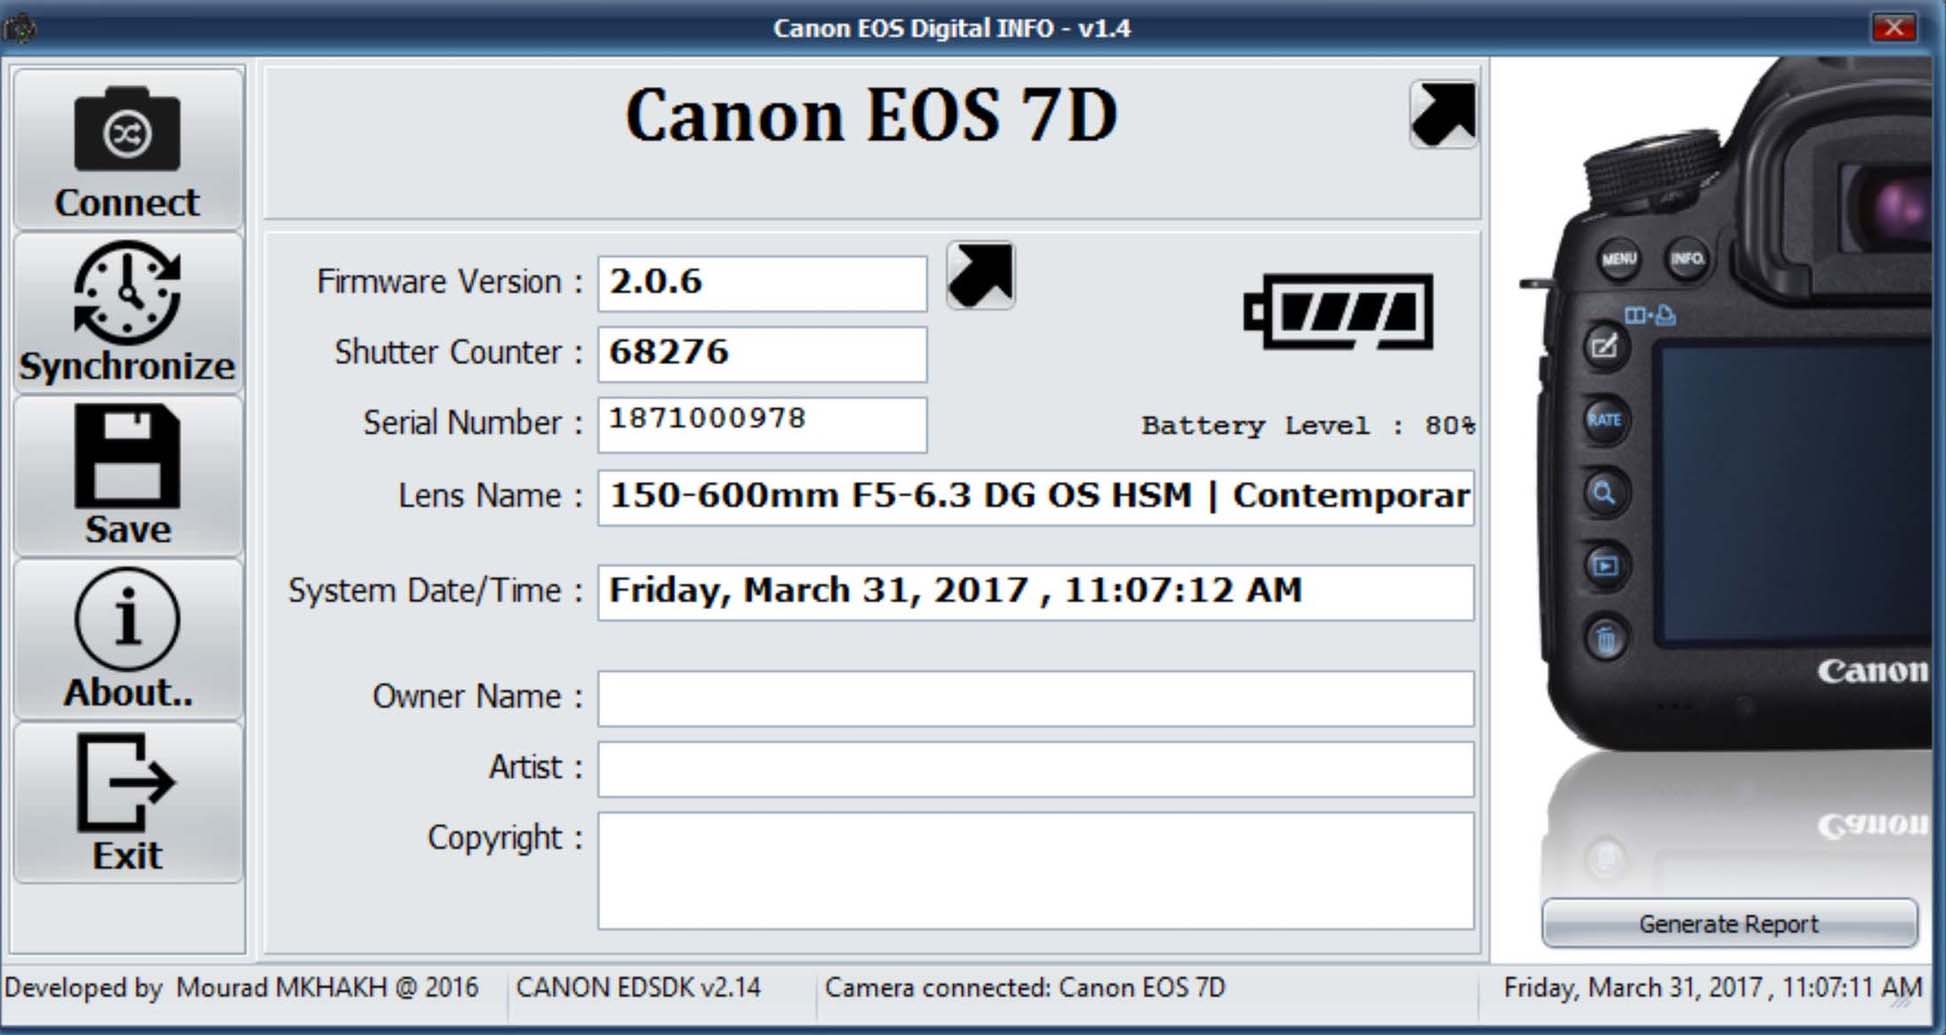 canon eos camera info v1.2 windows